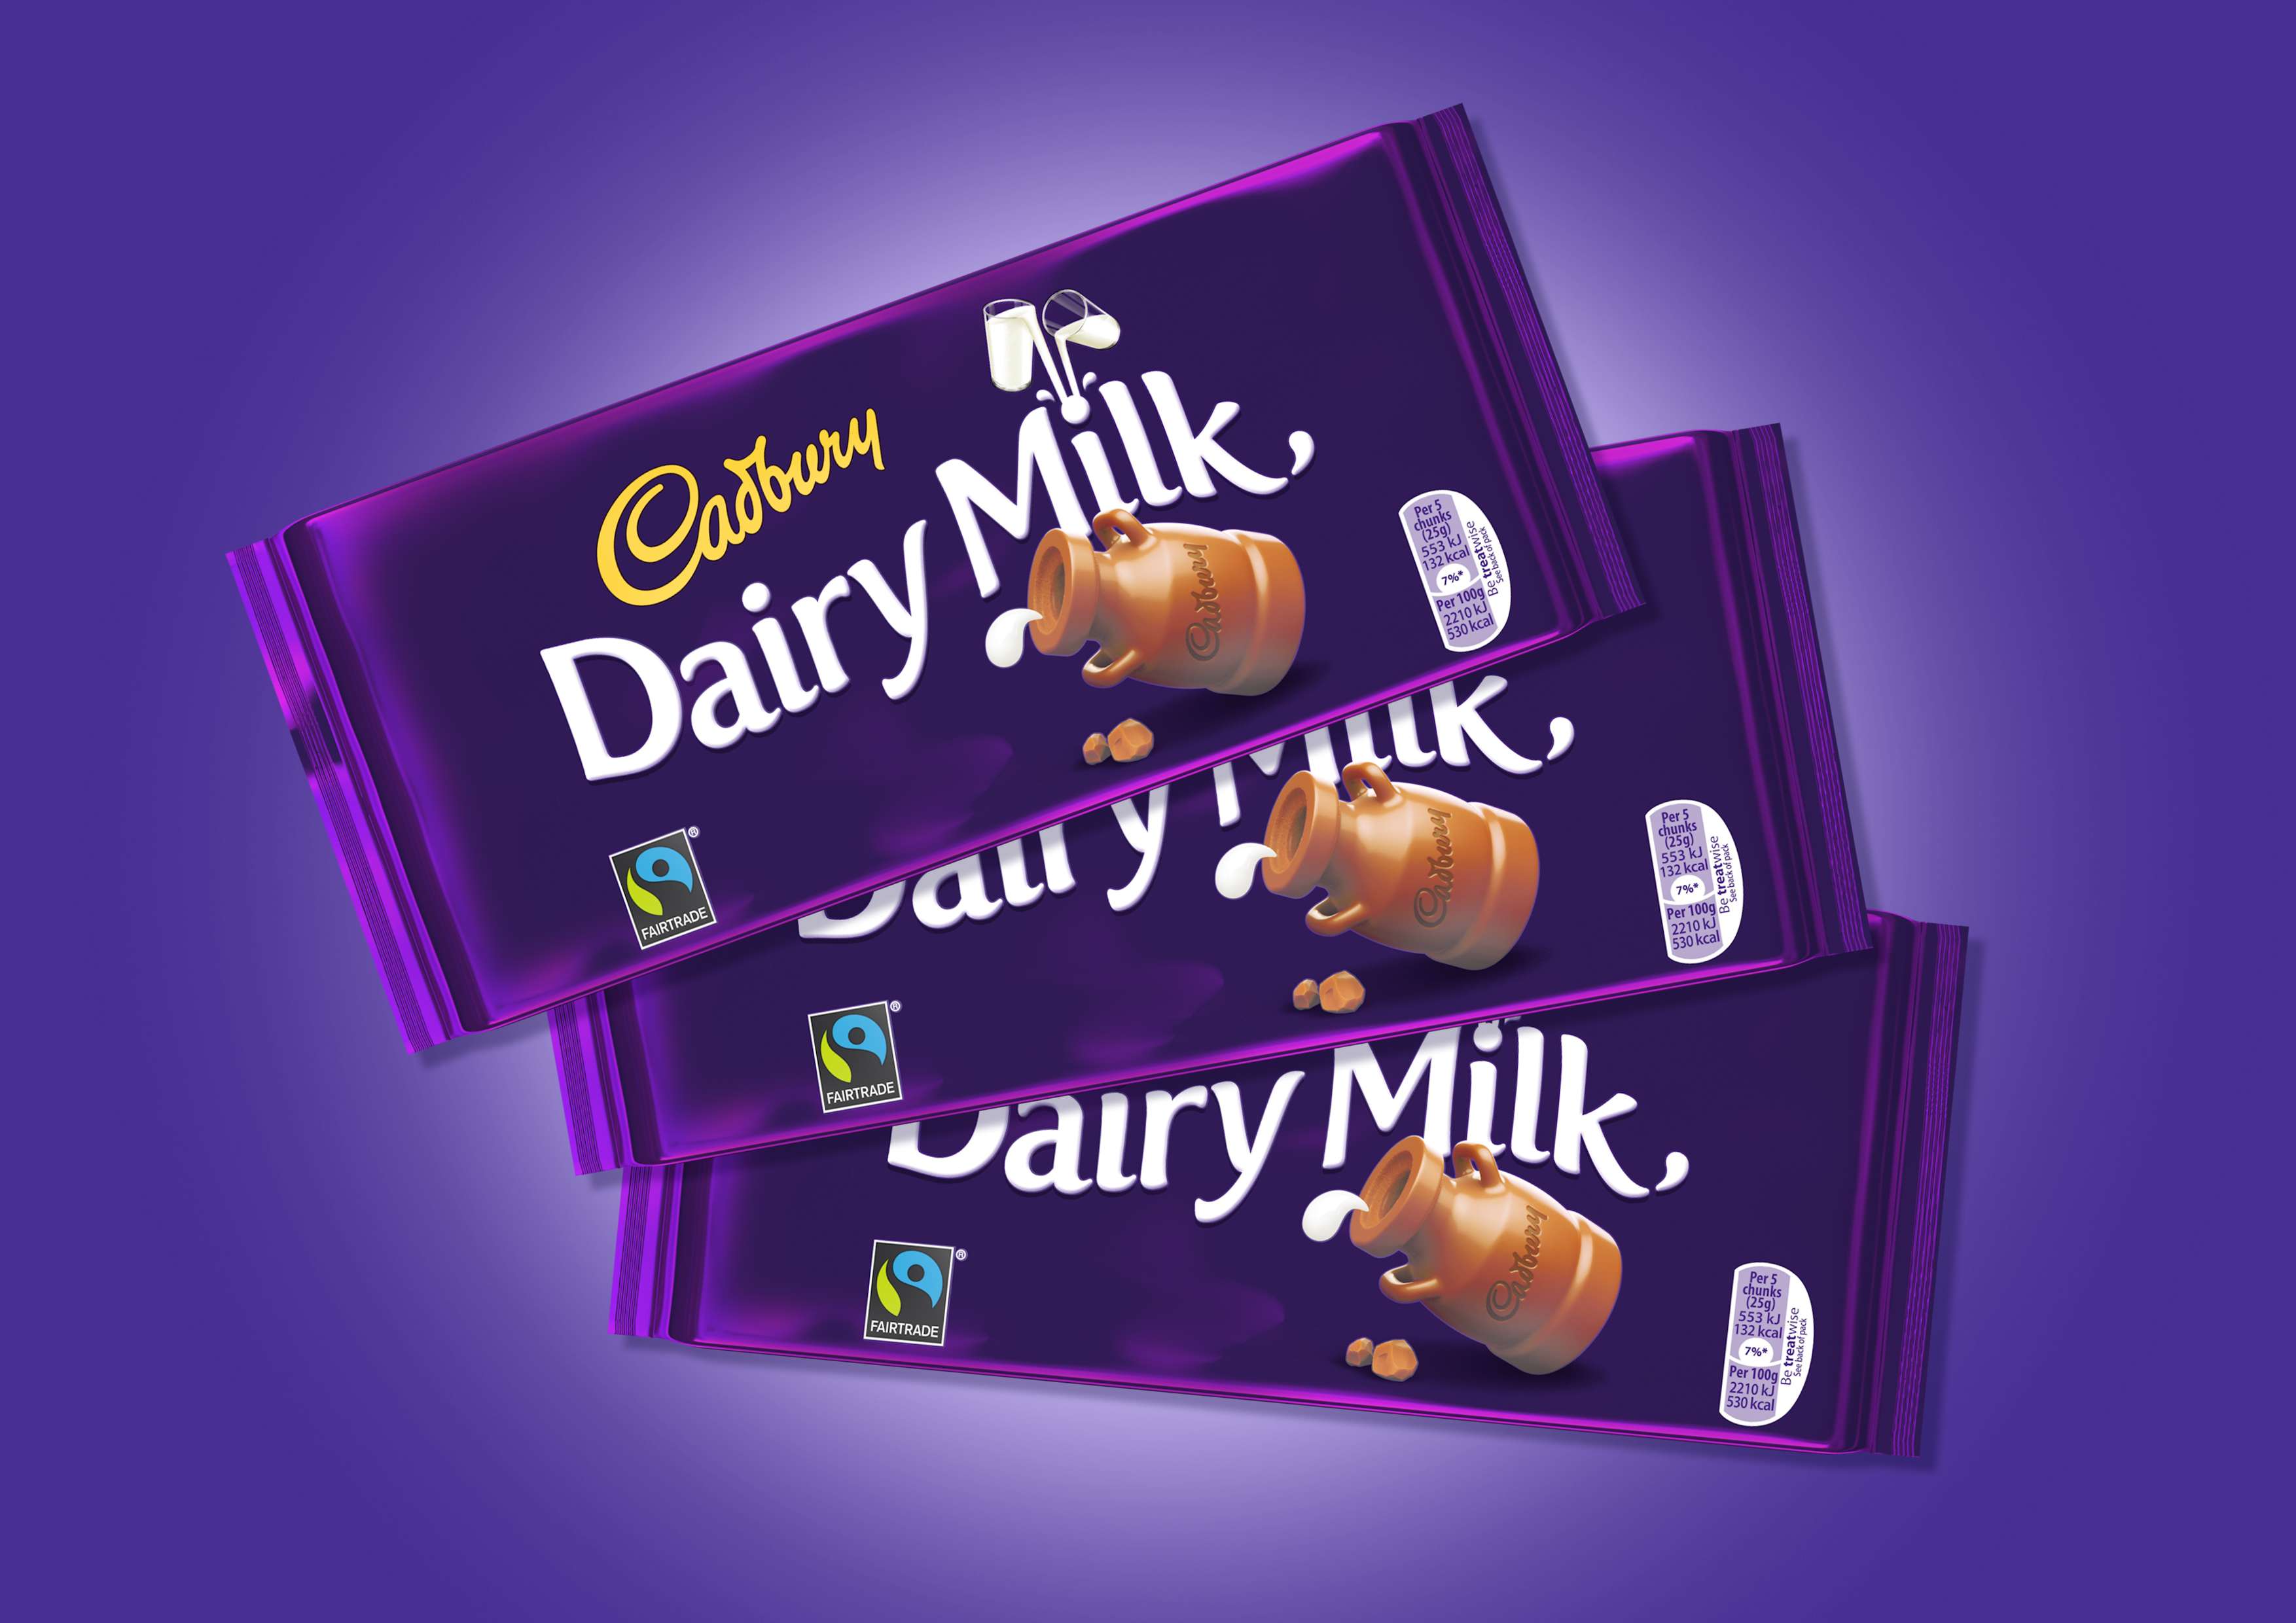 New Cadbury Dairy Milk pack design unveiled